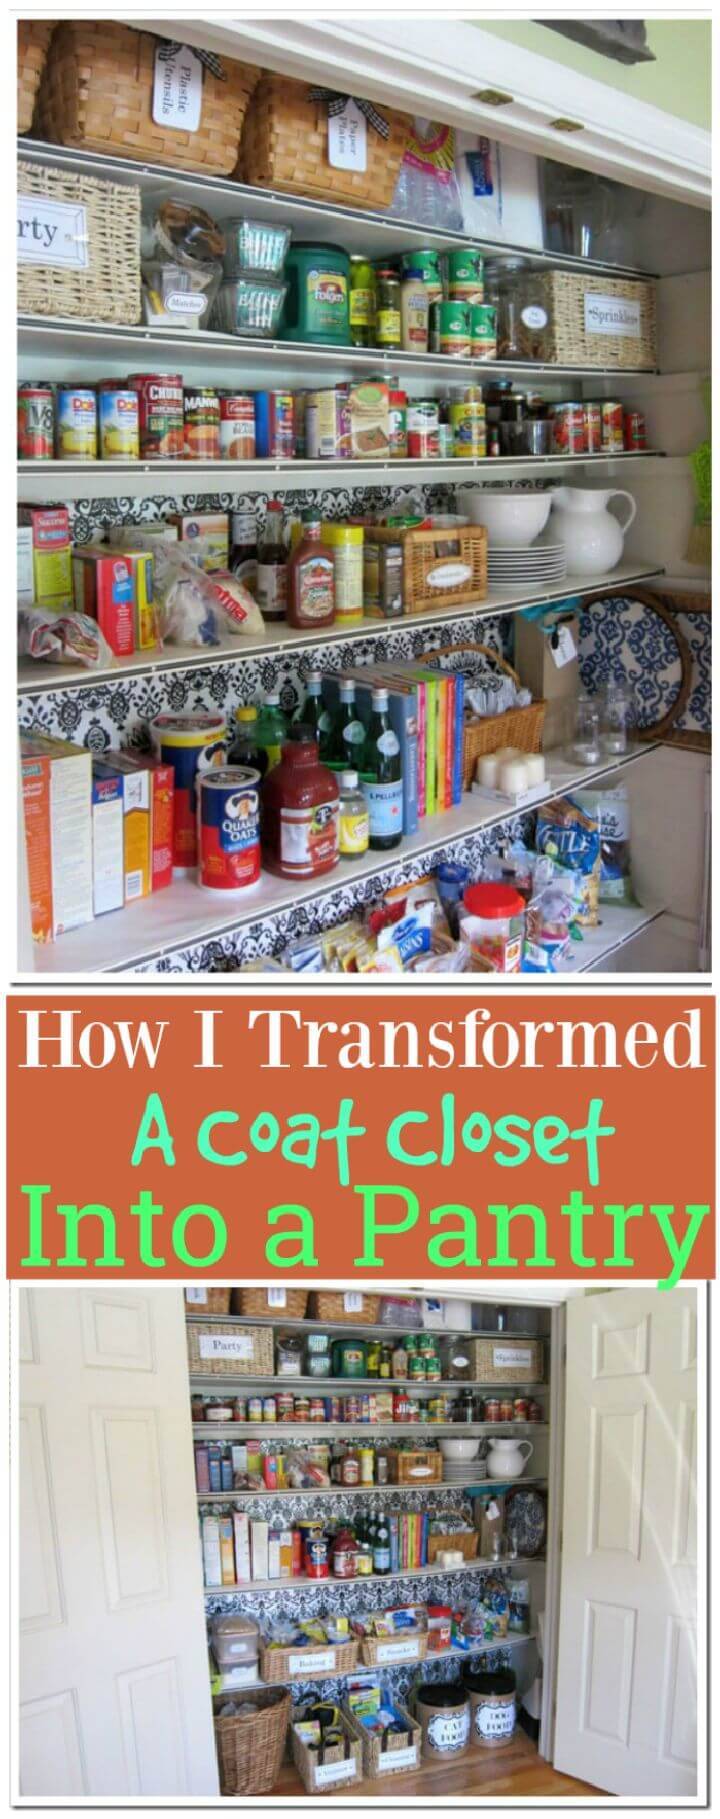 How I Transformed a Coat Closet Into a Pantry